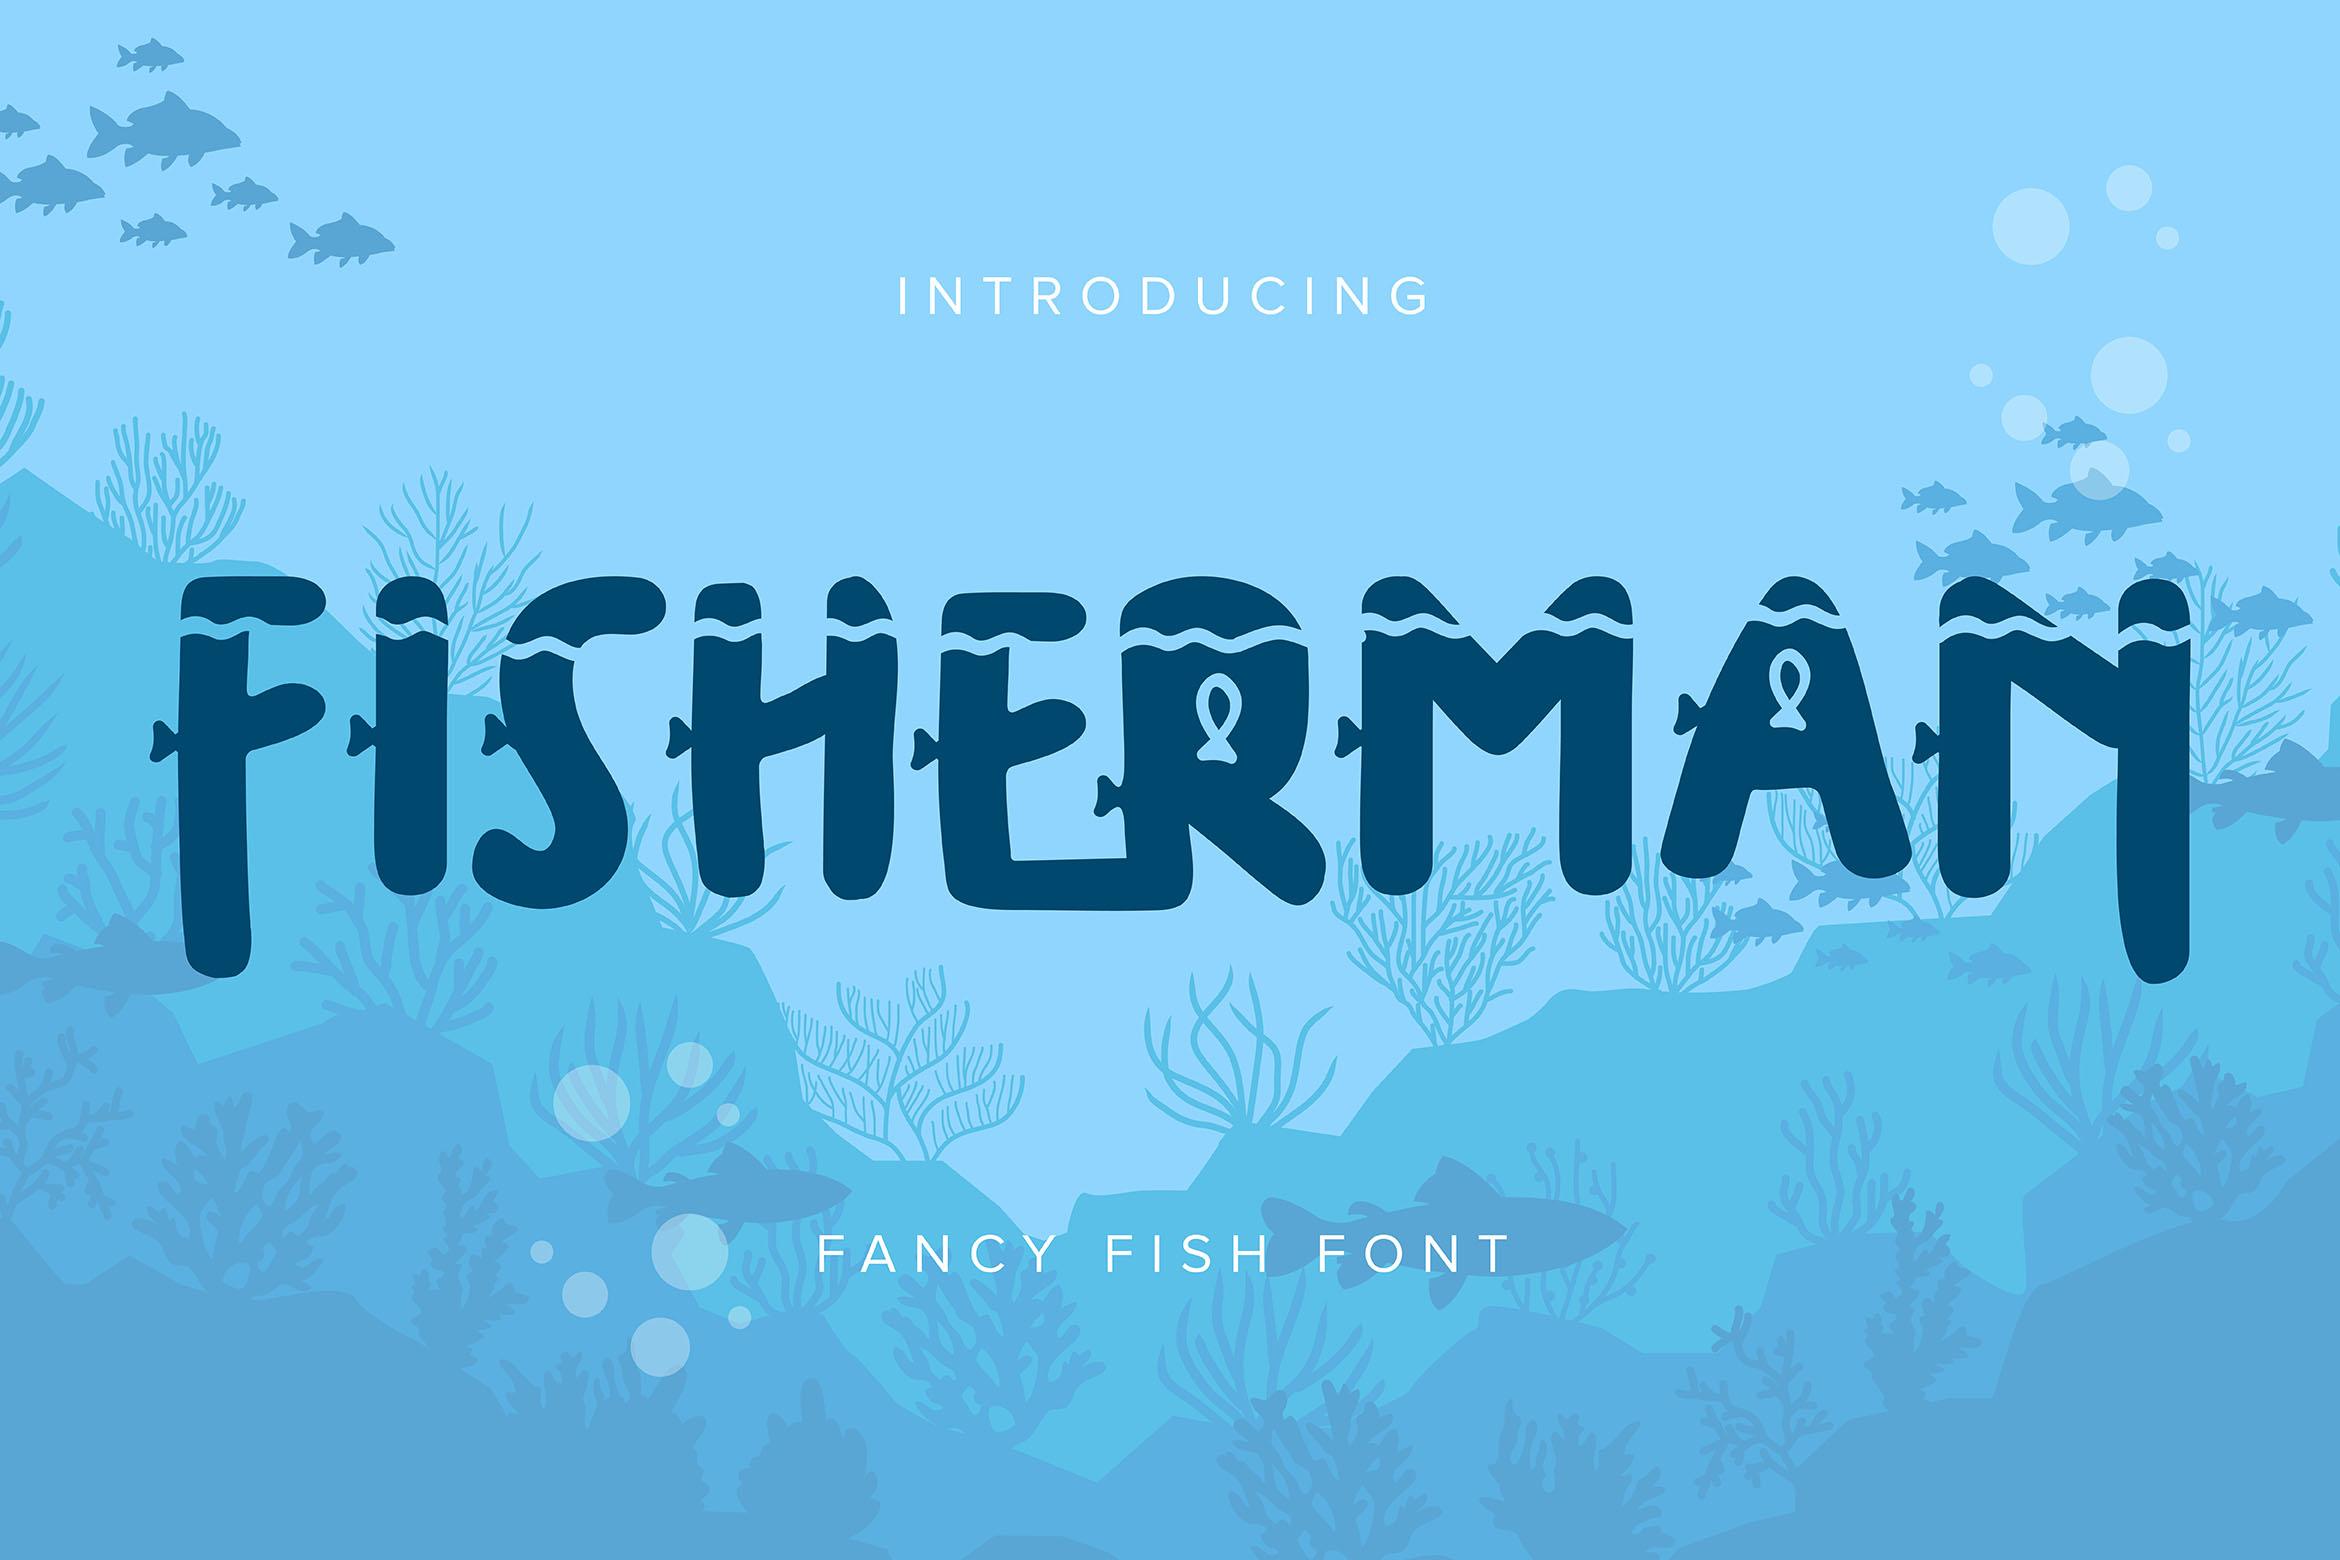 Fisherman Font